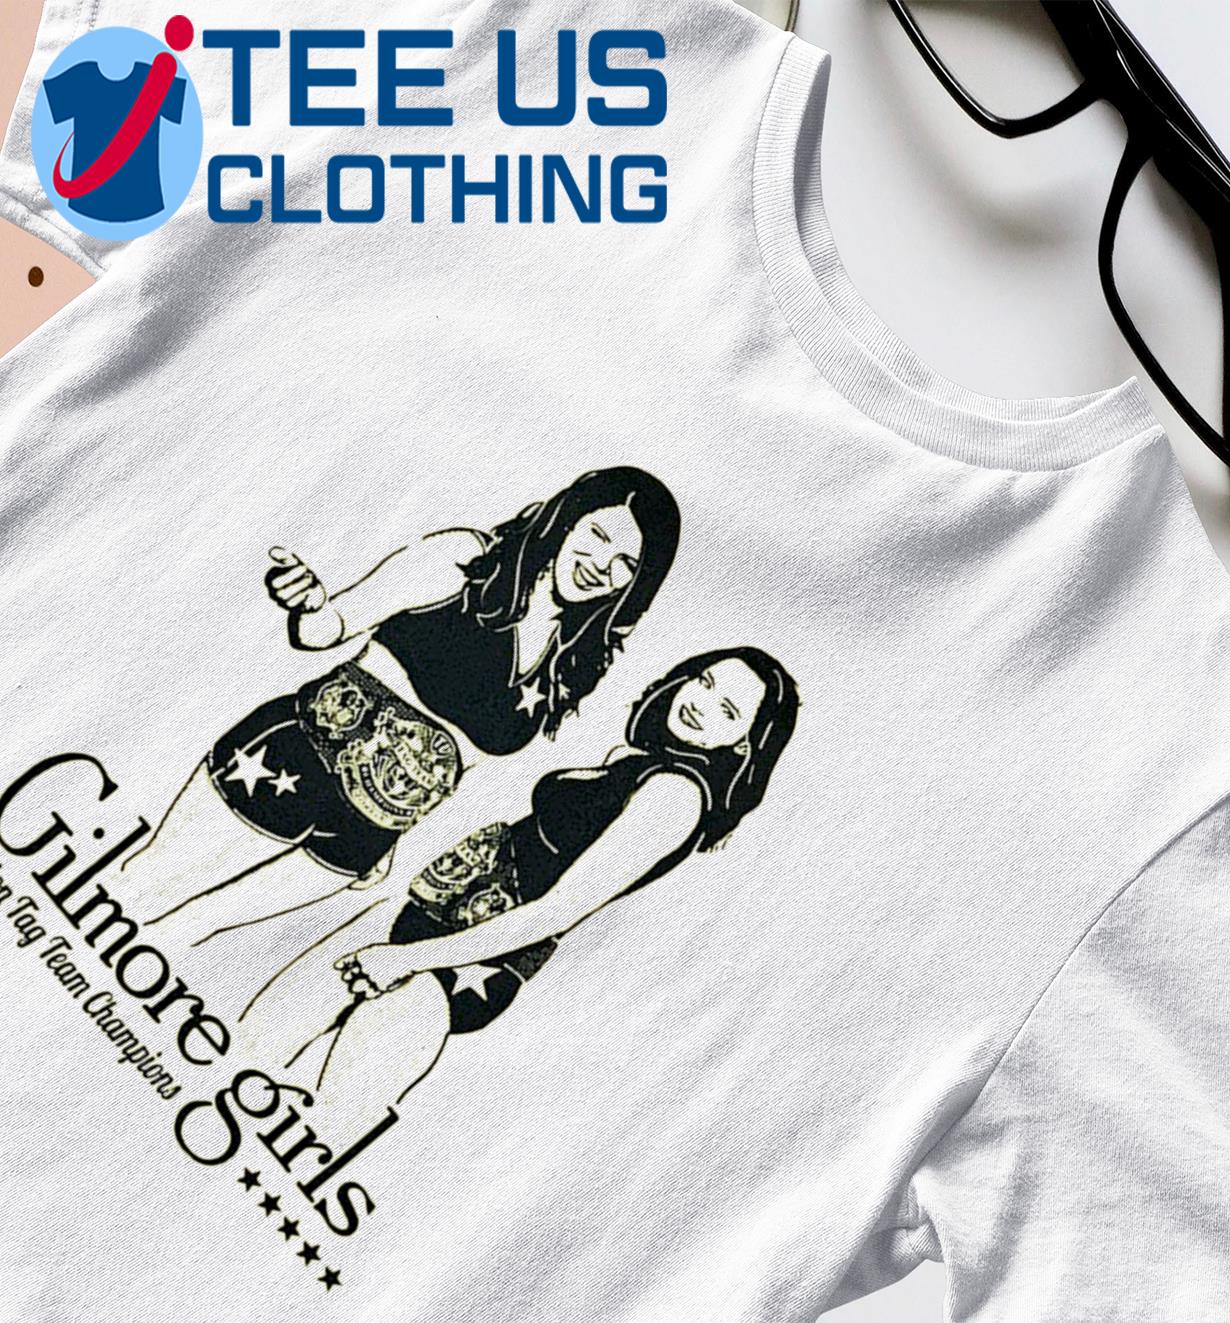 Gilmore Girls Television Tag Team Champions Shirt